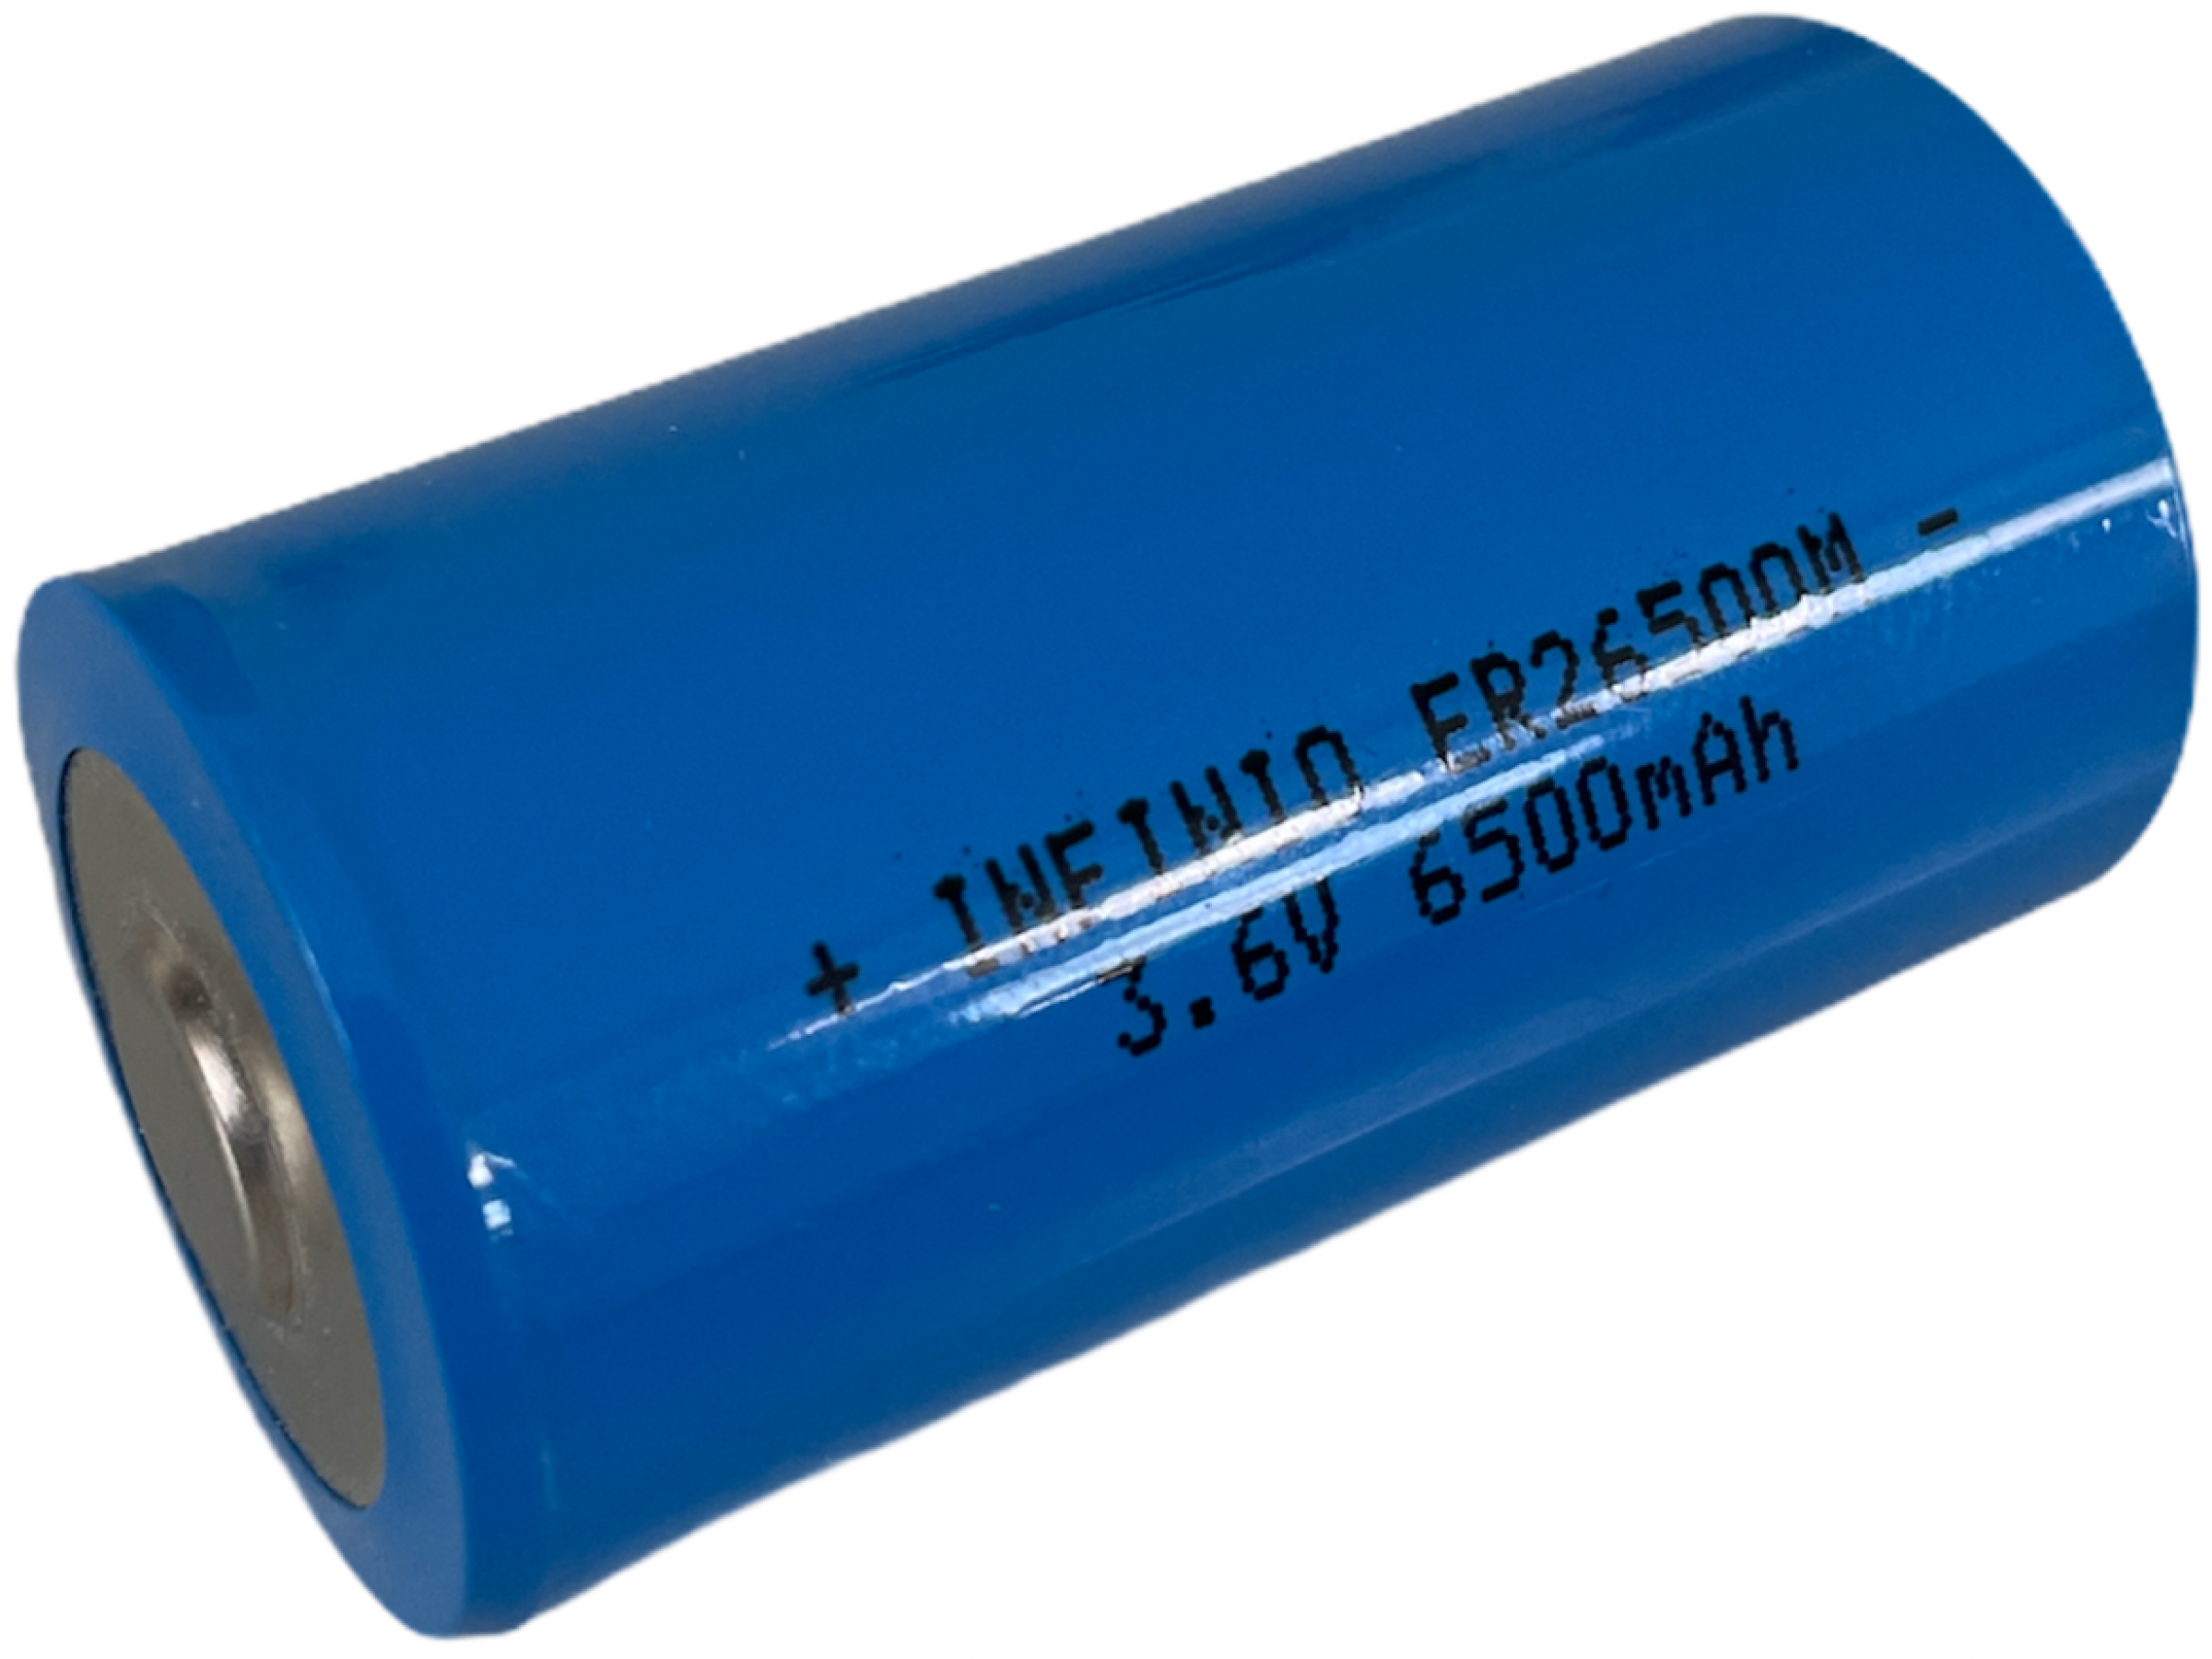 Infinio Spezial-Batterie Baby (C) ER26500 Lithium 3.6V 6500 mAh High Power spiralcell